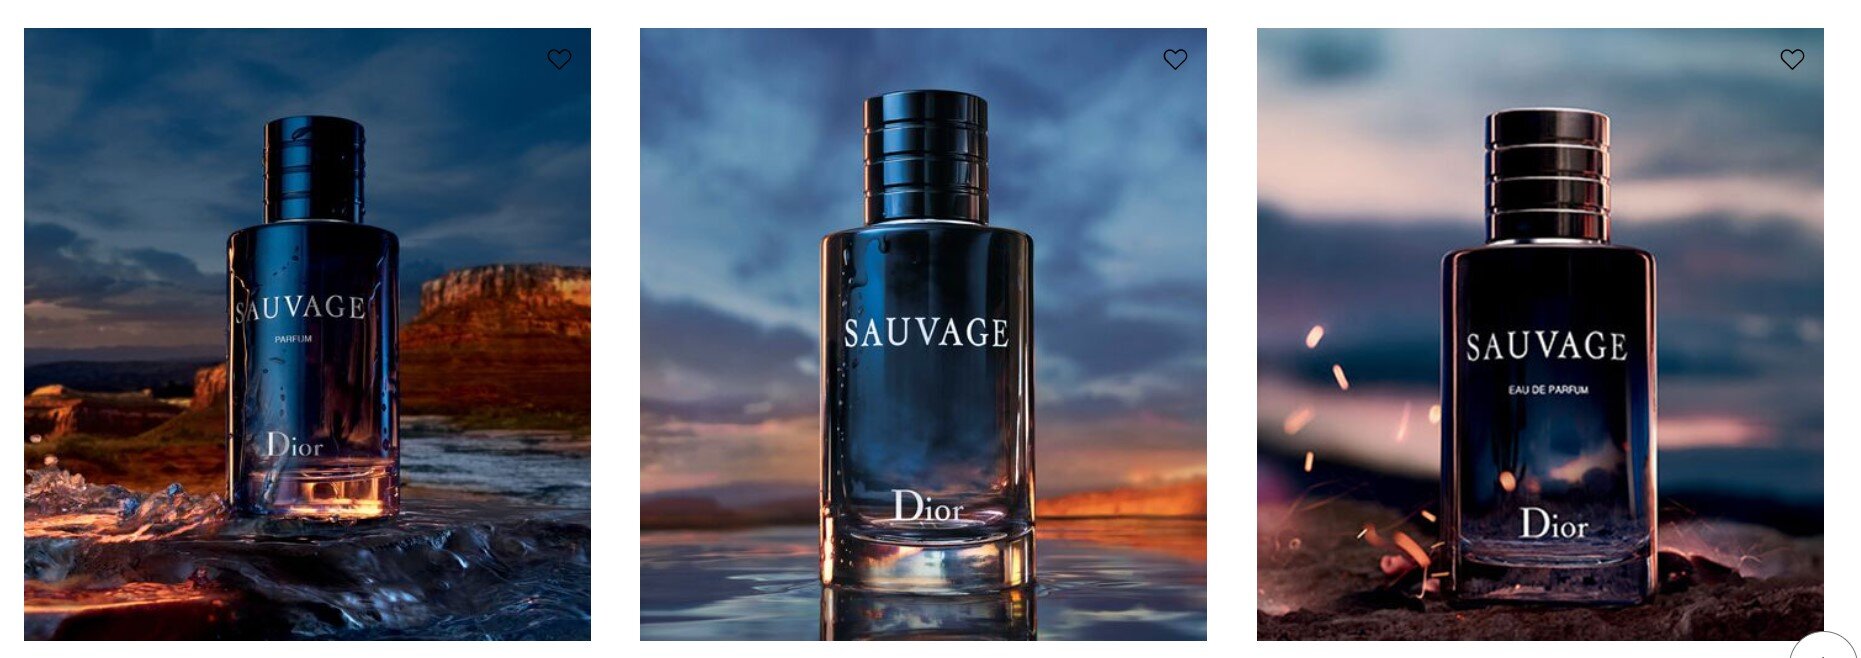 Sauvage Dior.jpg